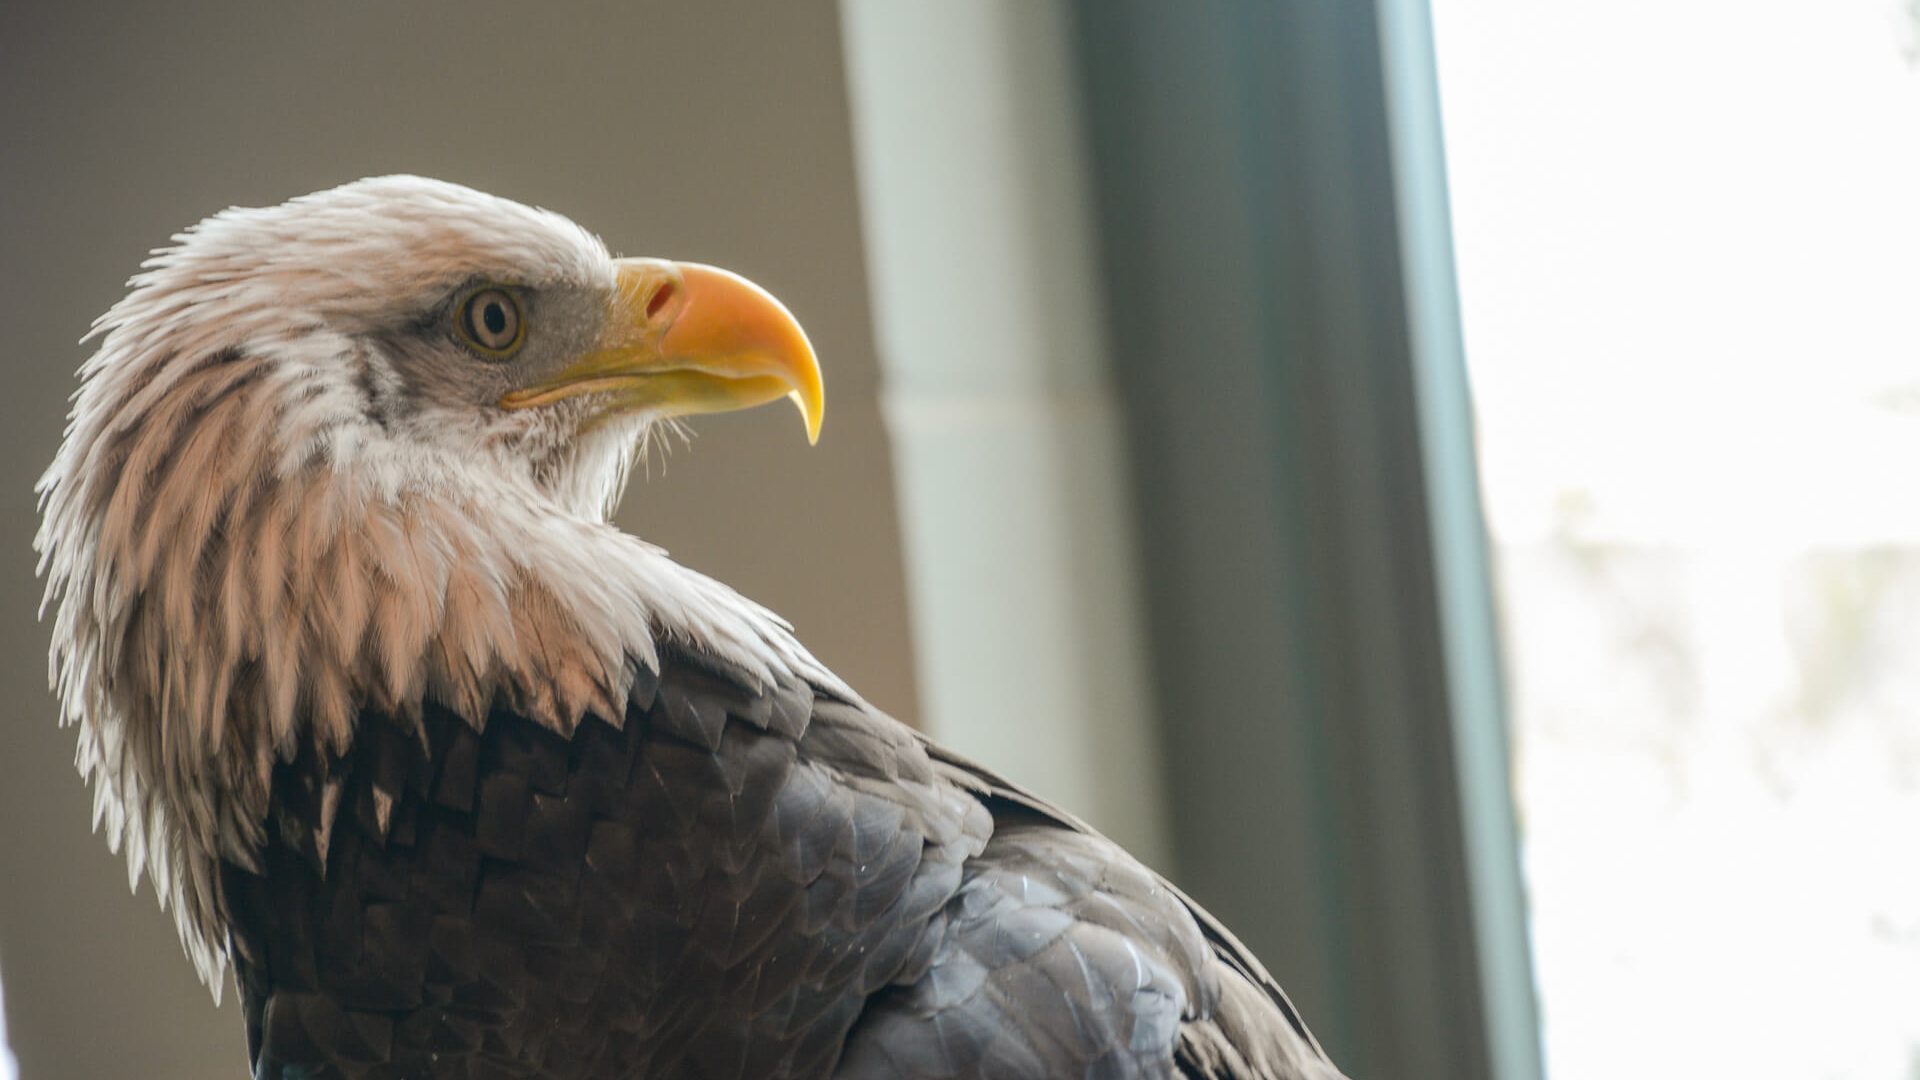 Bald eagle at National Eagle Center, Wabasha Minnesota